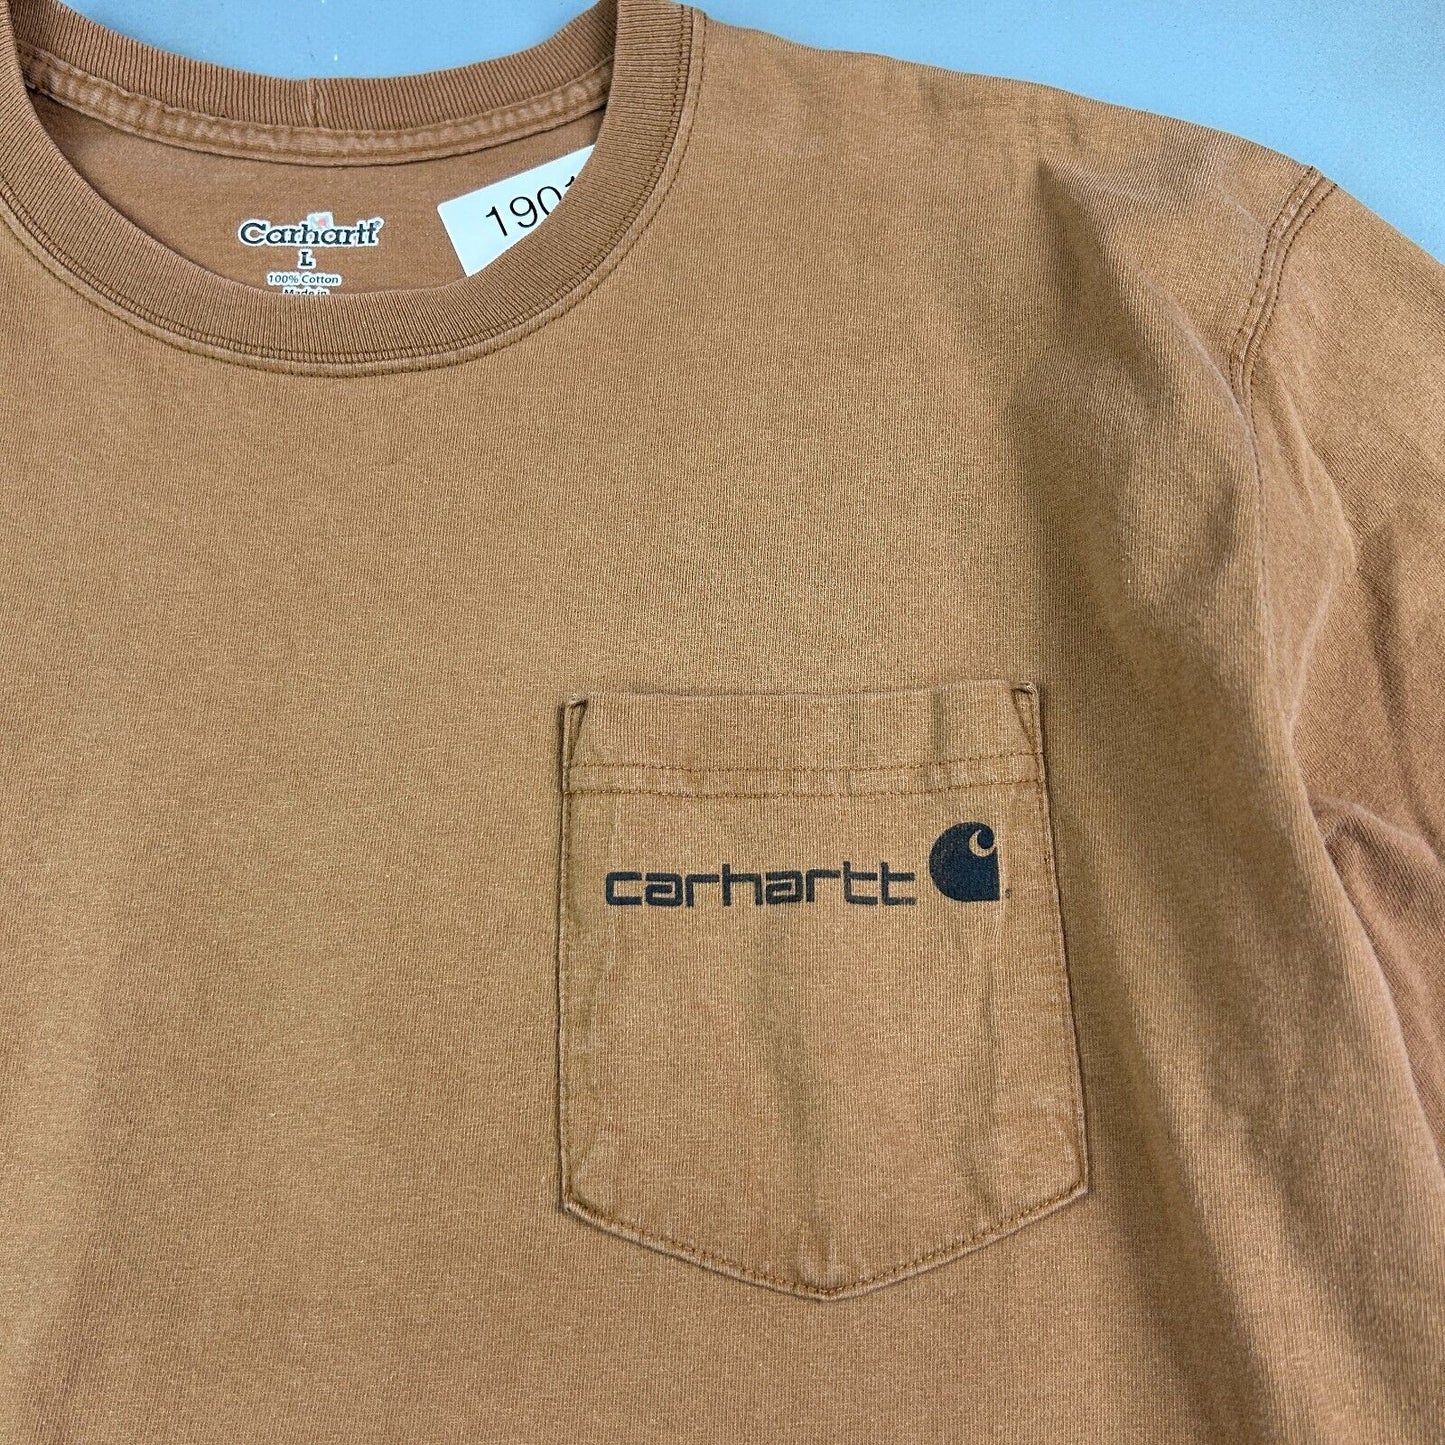 CARHARTT Logo Brown Pocket T-Shirt sz L Adult